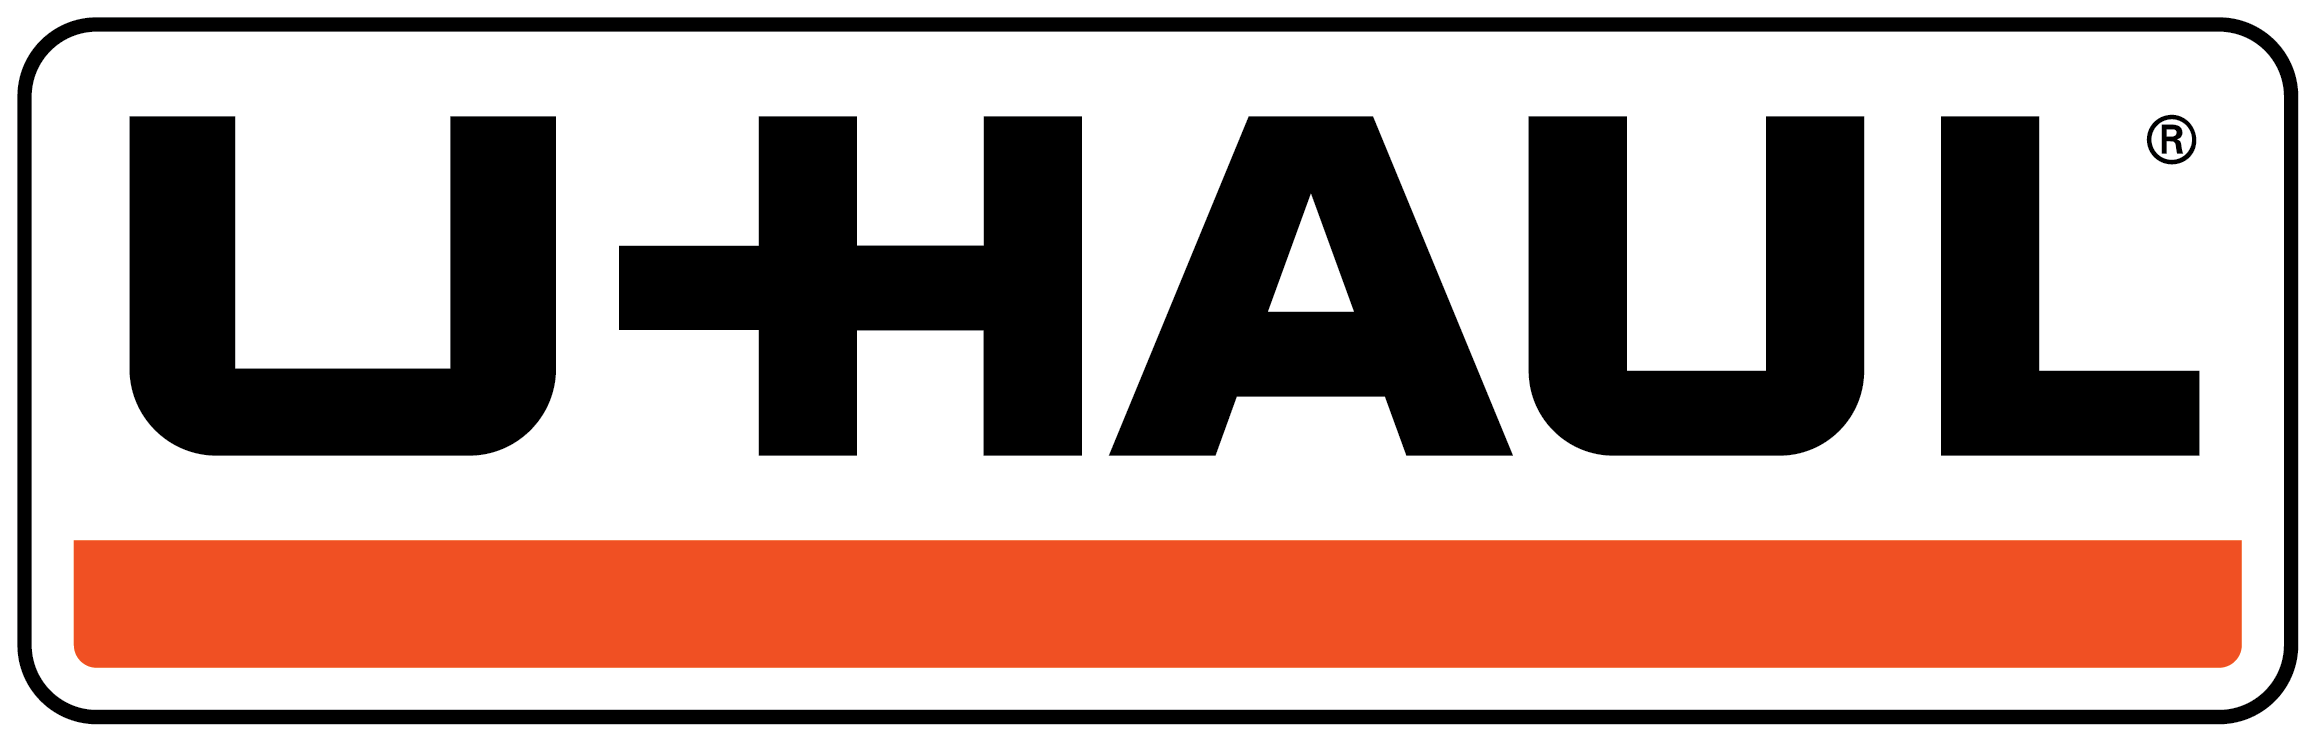 uhaul logo